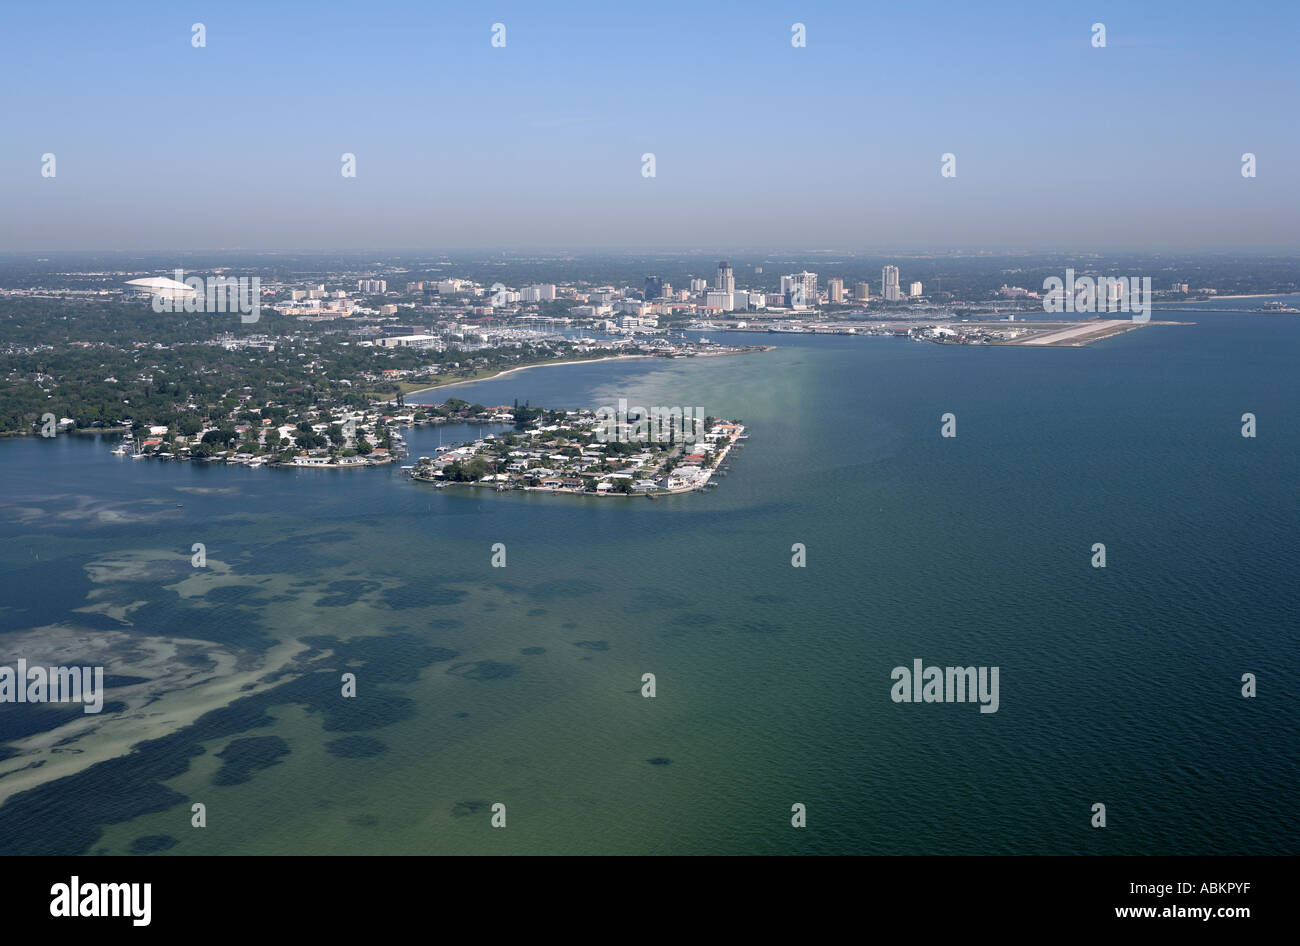 Aerial photo of Saint Petersburg Tampa Bay Lassing Park Albert Whitted Airport Florida Stock Photo